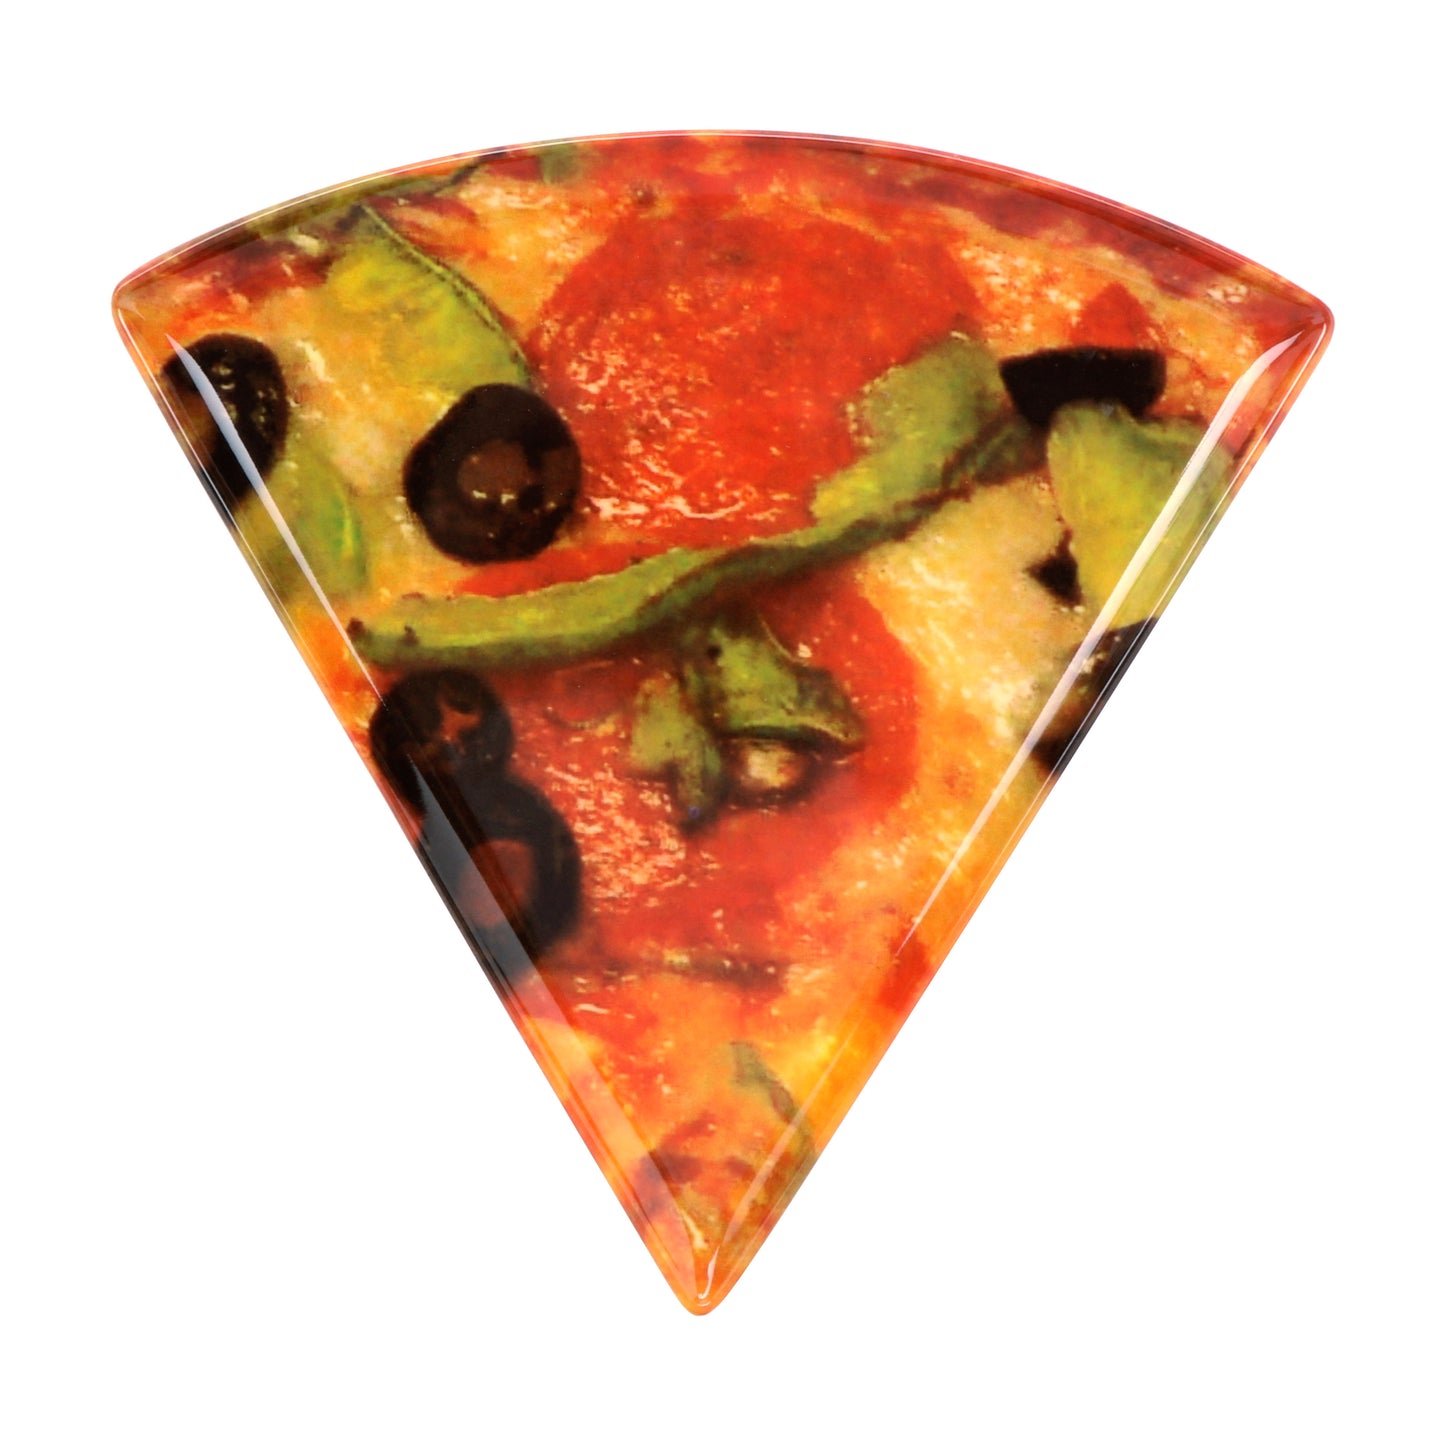 8.75" x 9" Triangle Pizza Plate